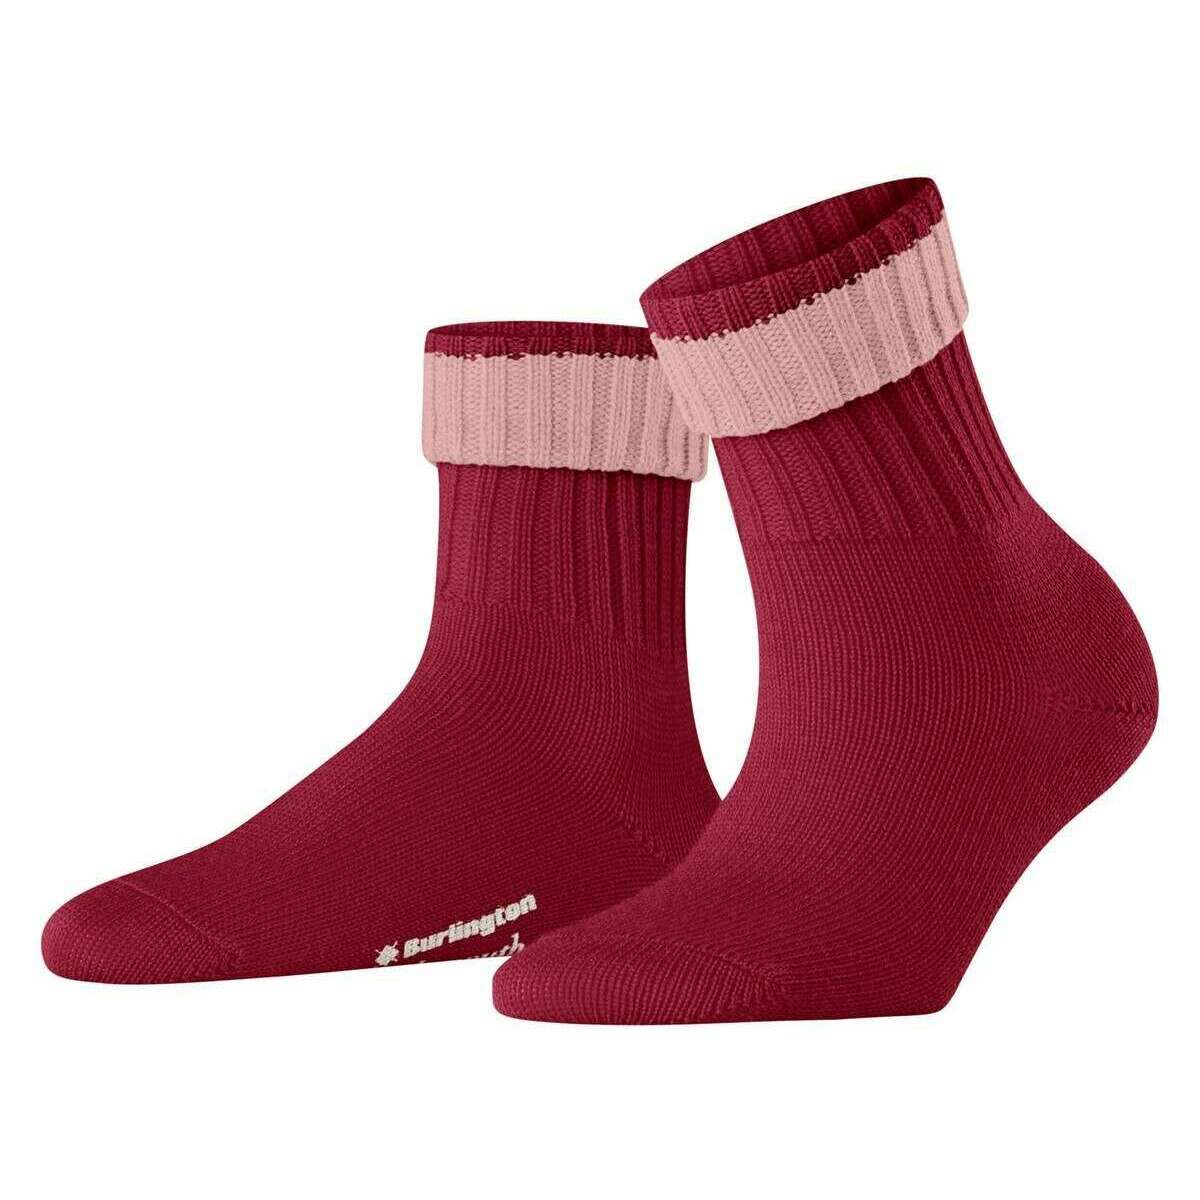 Burlington Plymouth Socks - Cranberry Red